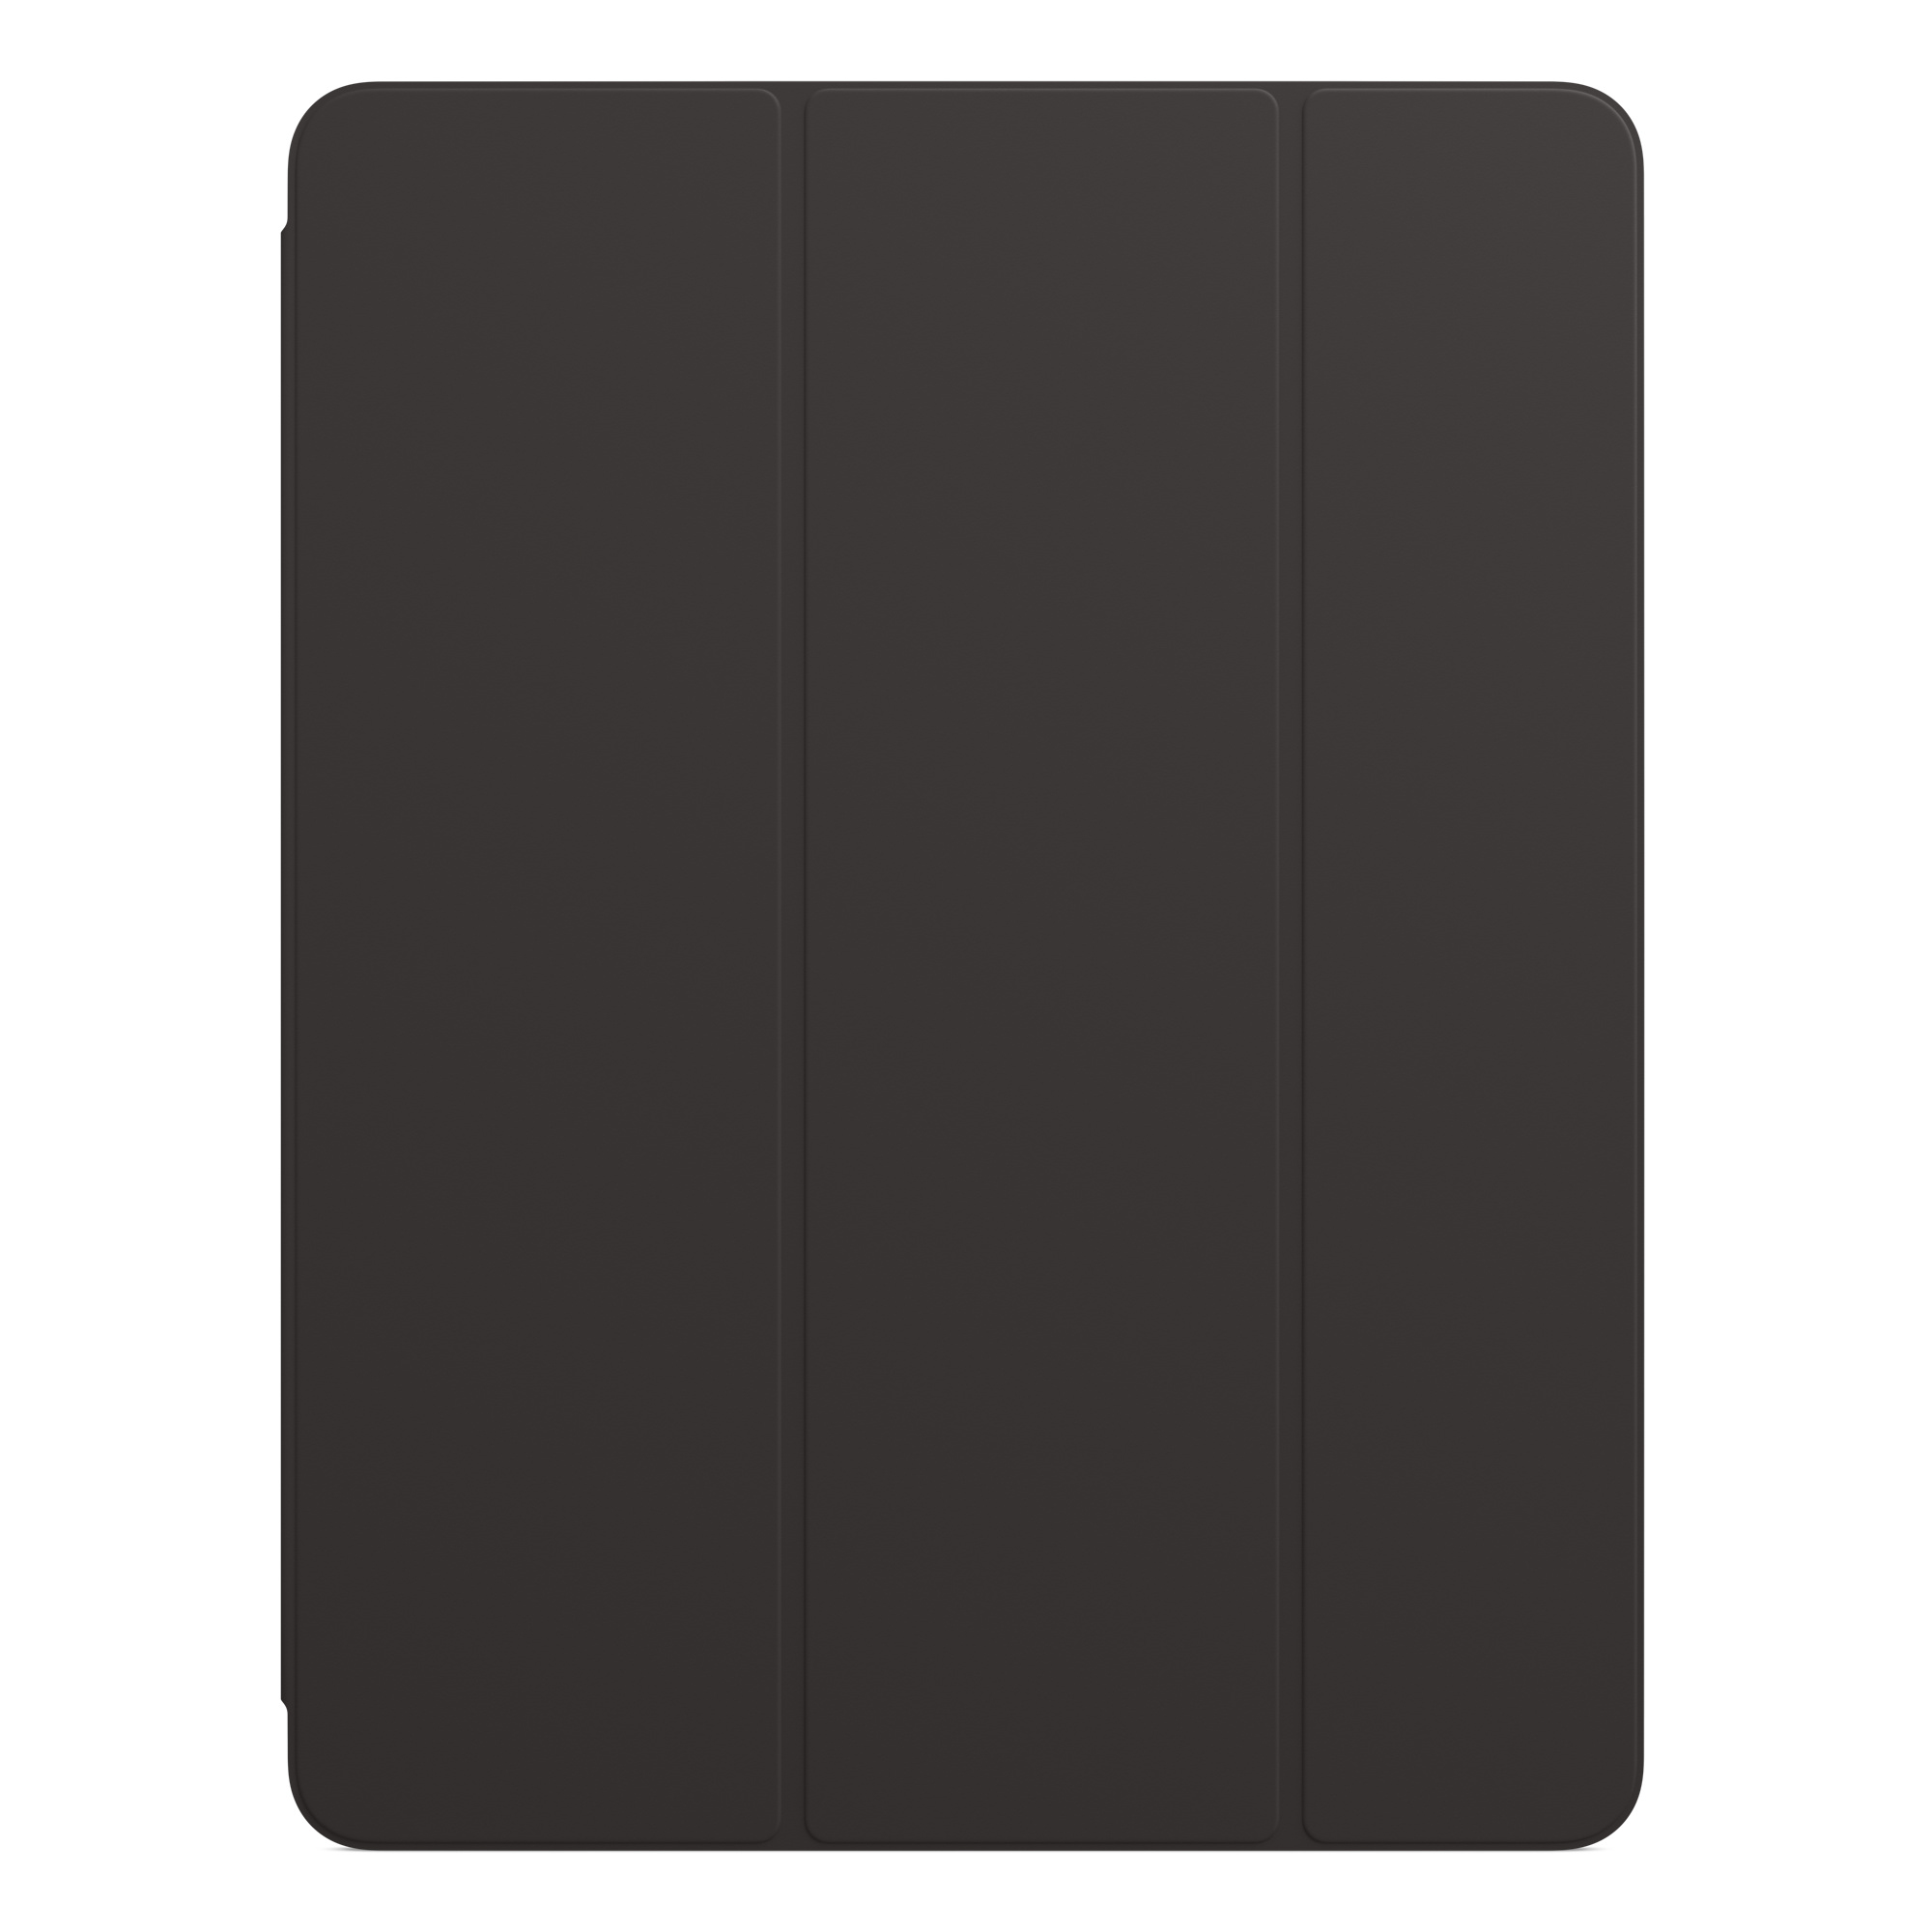  Smart Folio for iPad Pro 12.9inch 5th generation Black